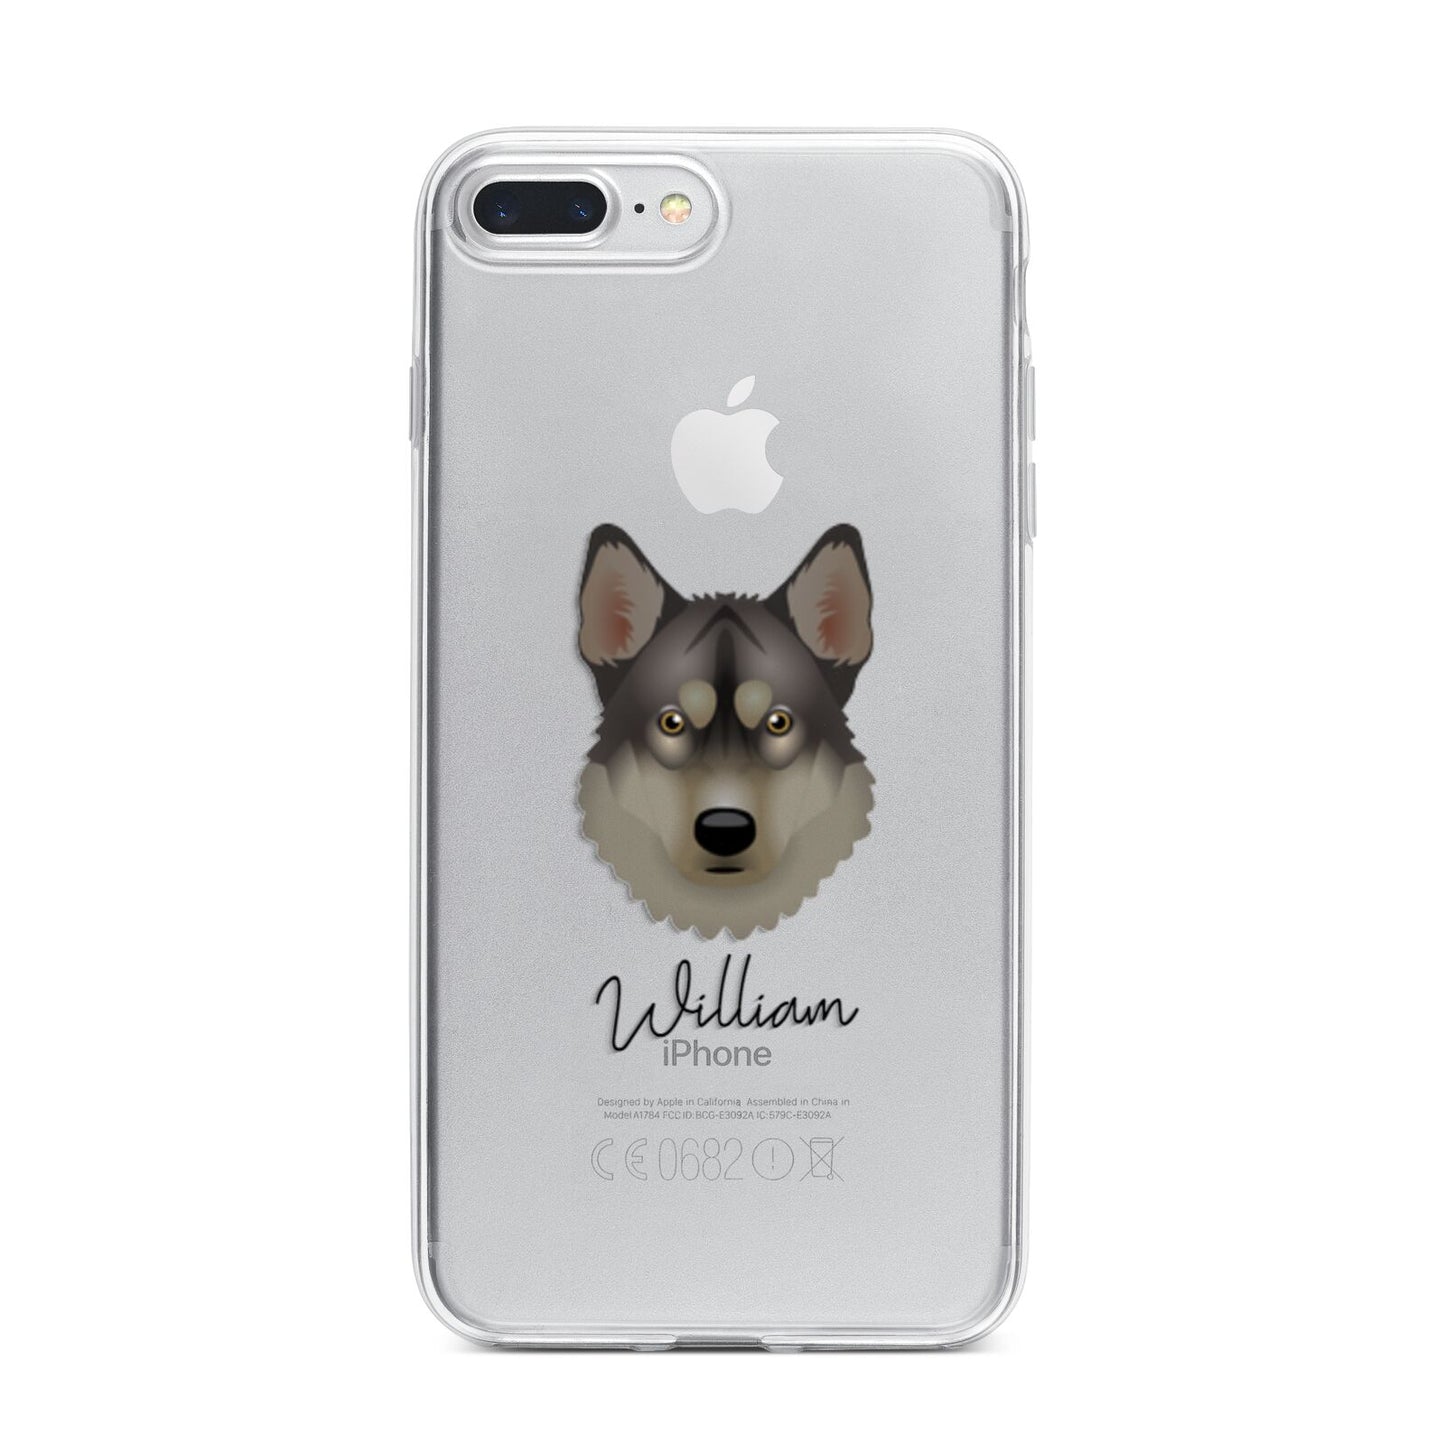 Tamaskan Personalised iPhone 7 Plus Bumper Case on Silver iPhone